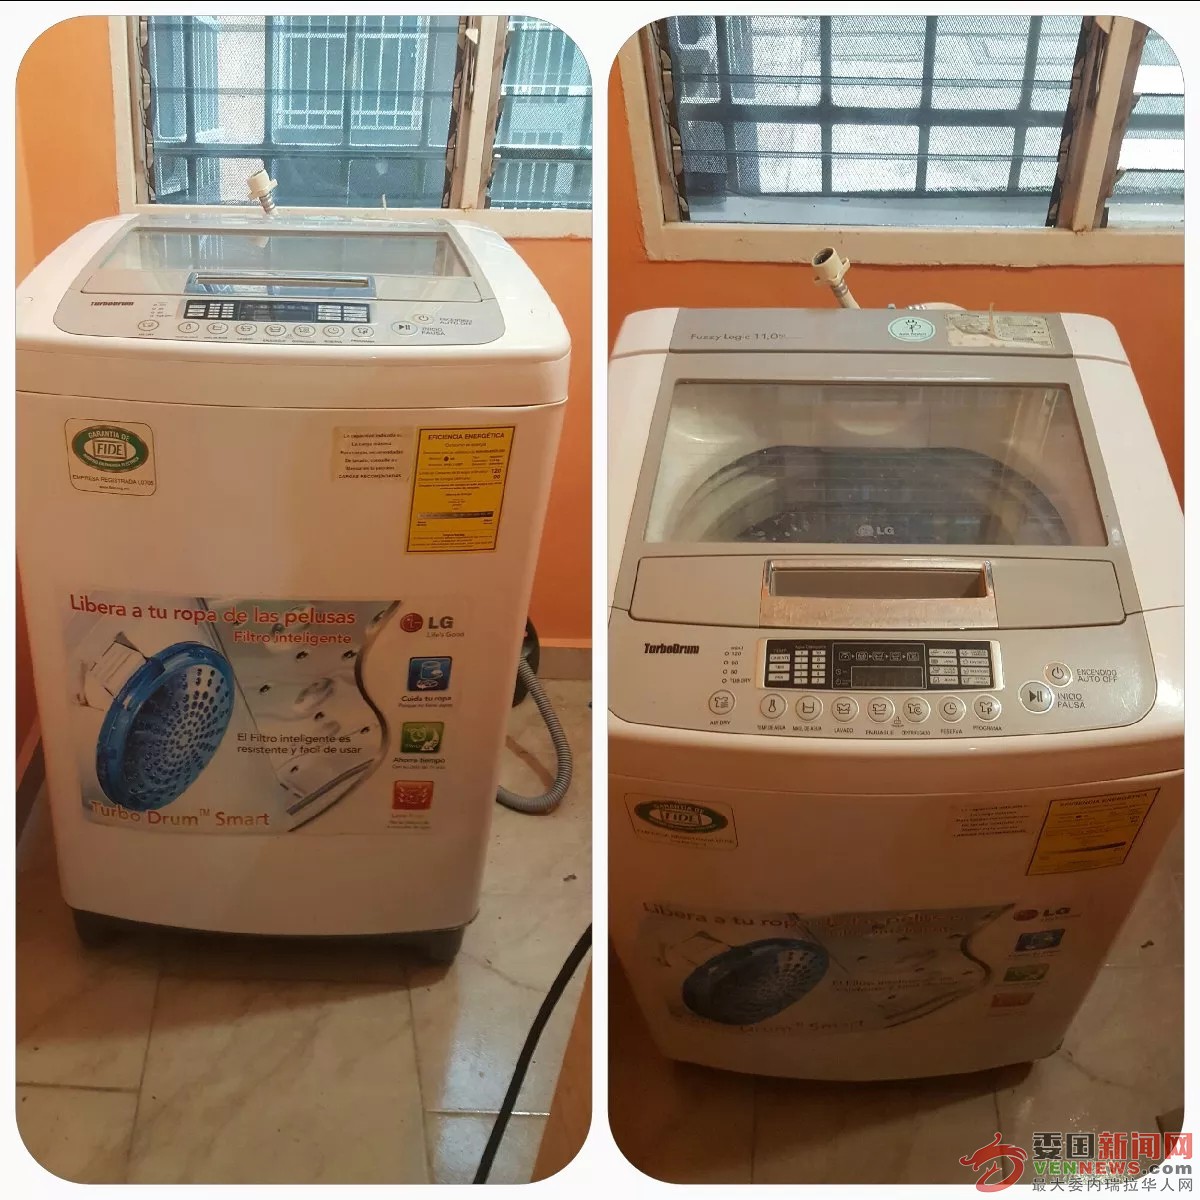 lavadora-automatica-lg-fuzzy-logic-turbo-drumm-de-11kg-D_NQ_NP_804367-MLV2641132.jpg